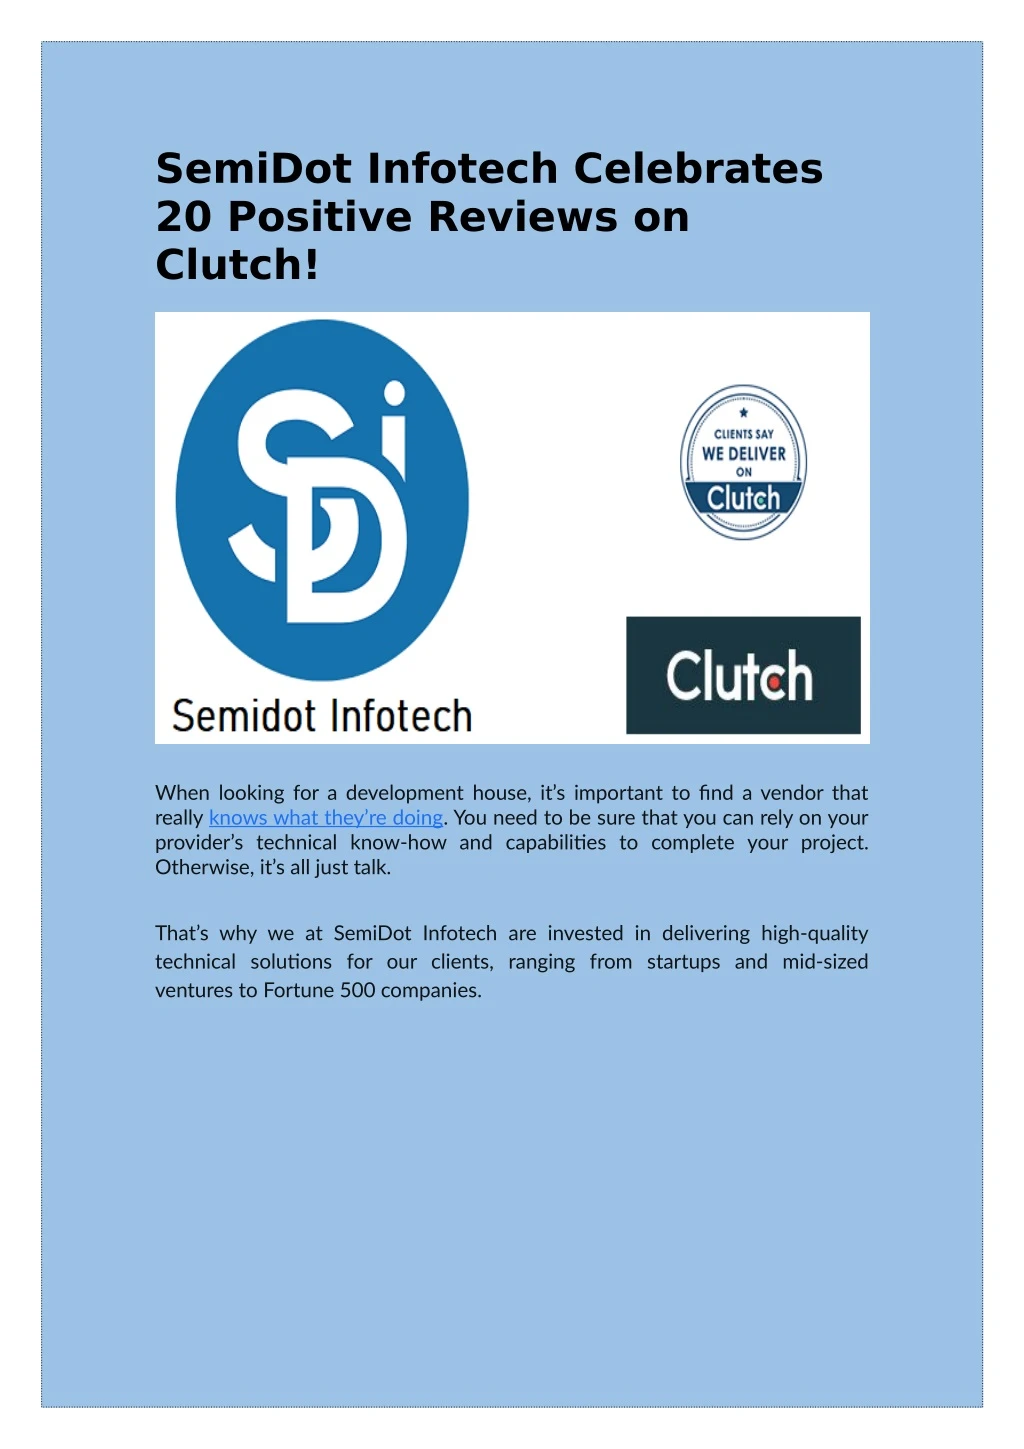 semidot infotech celebrates 20 positive reviews